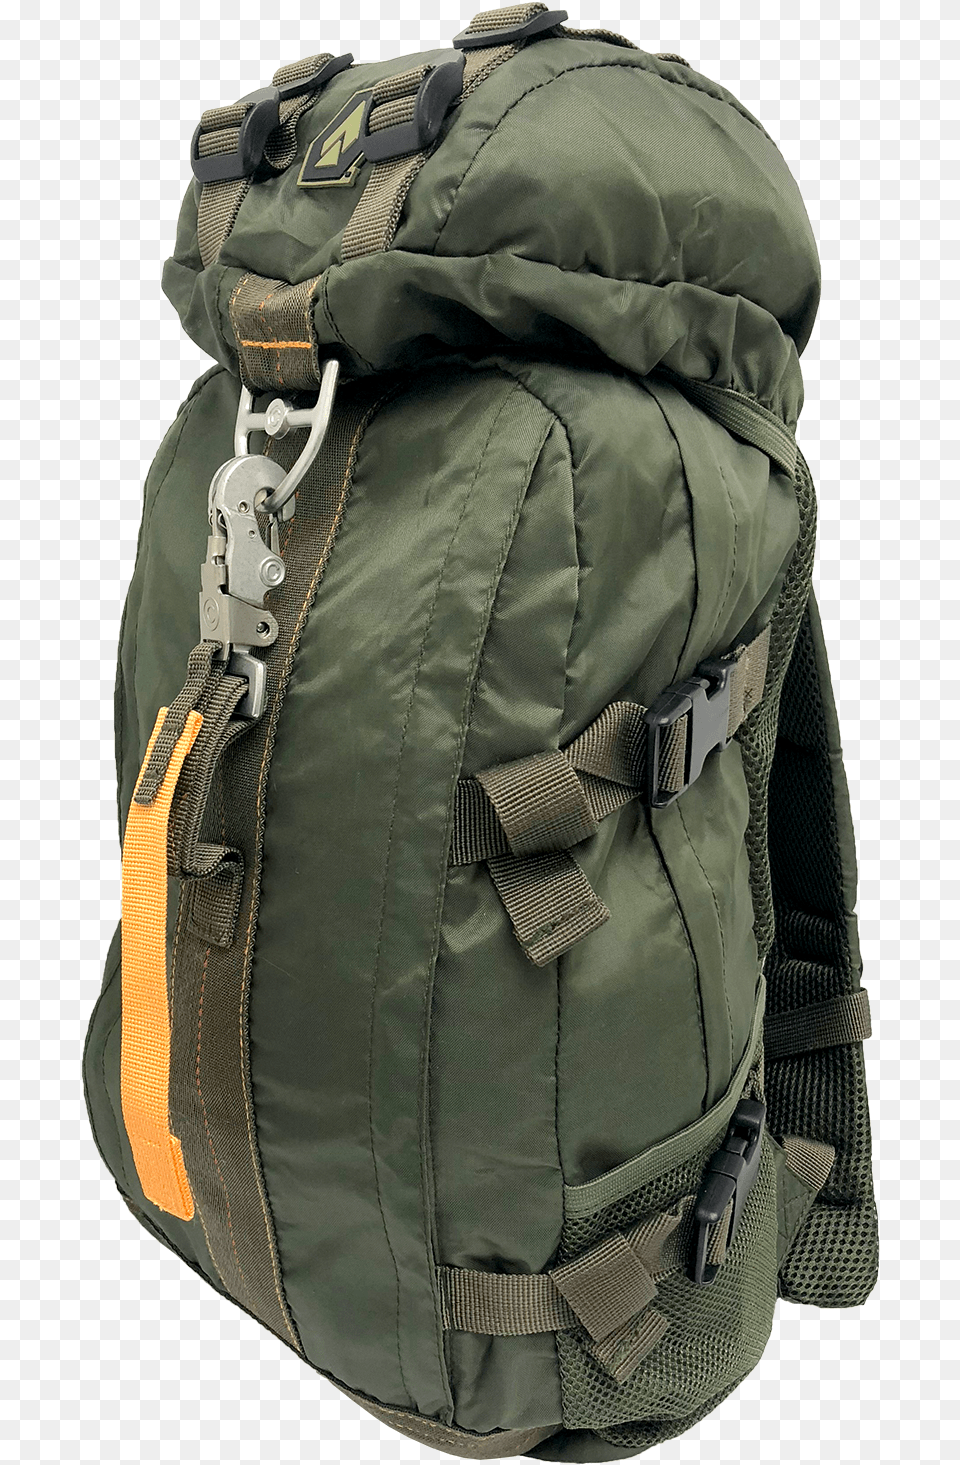 Opsgear Parachute Backpackclass Parachute Bag, Backpack, Gun, Weapon Free Png